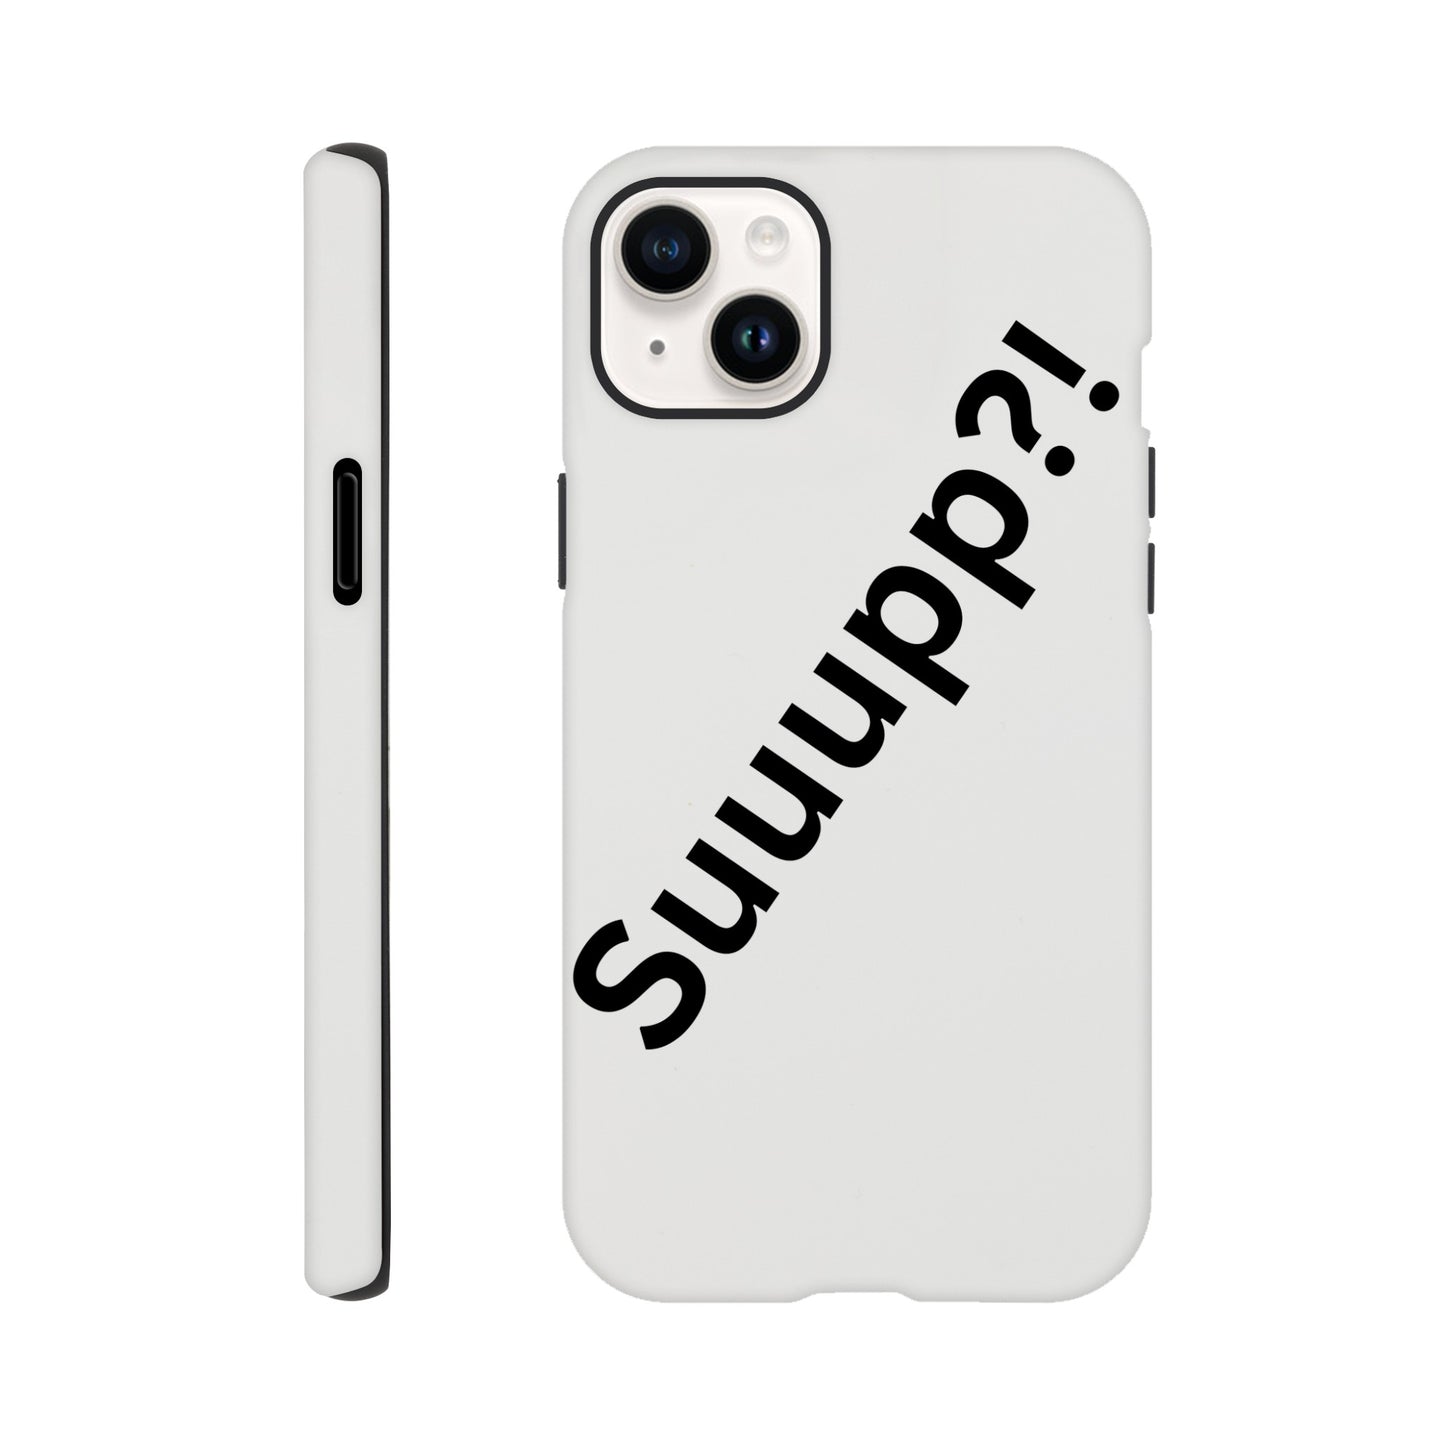 Suuppp Phone cases